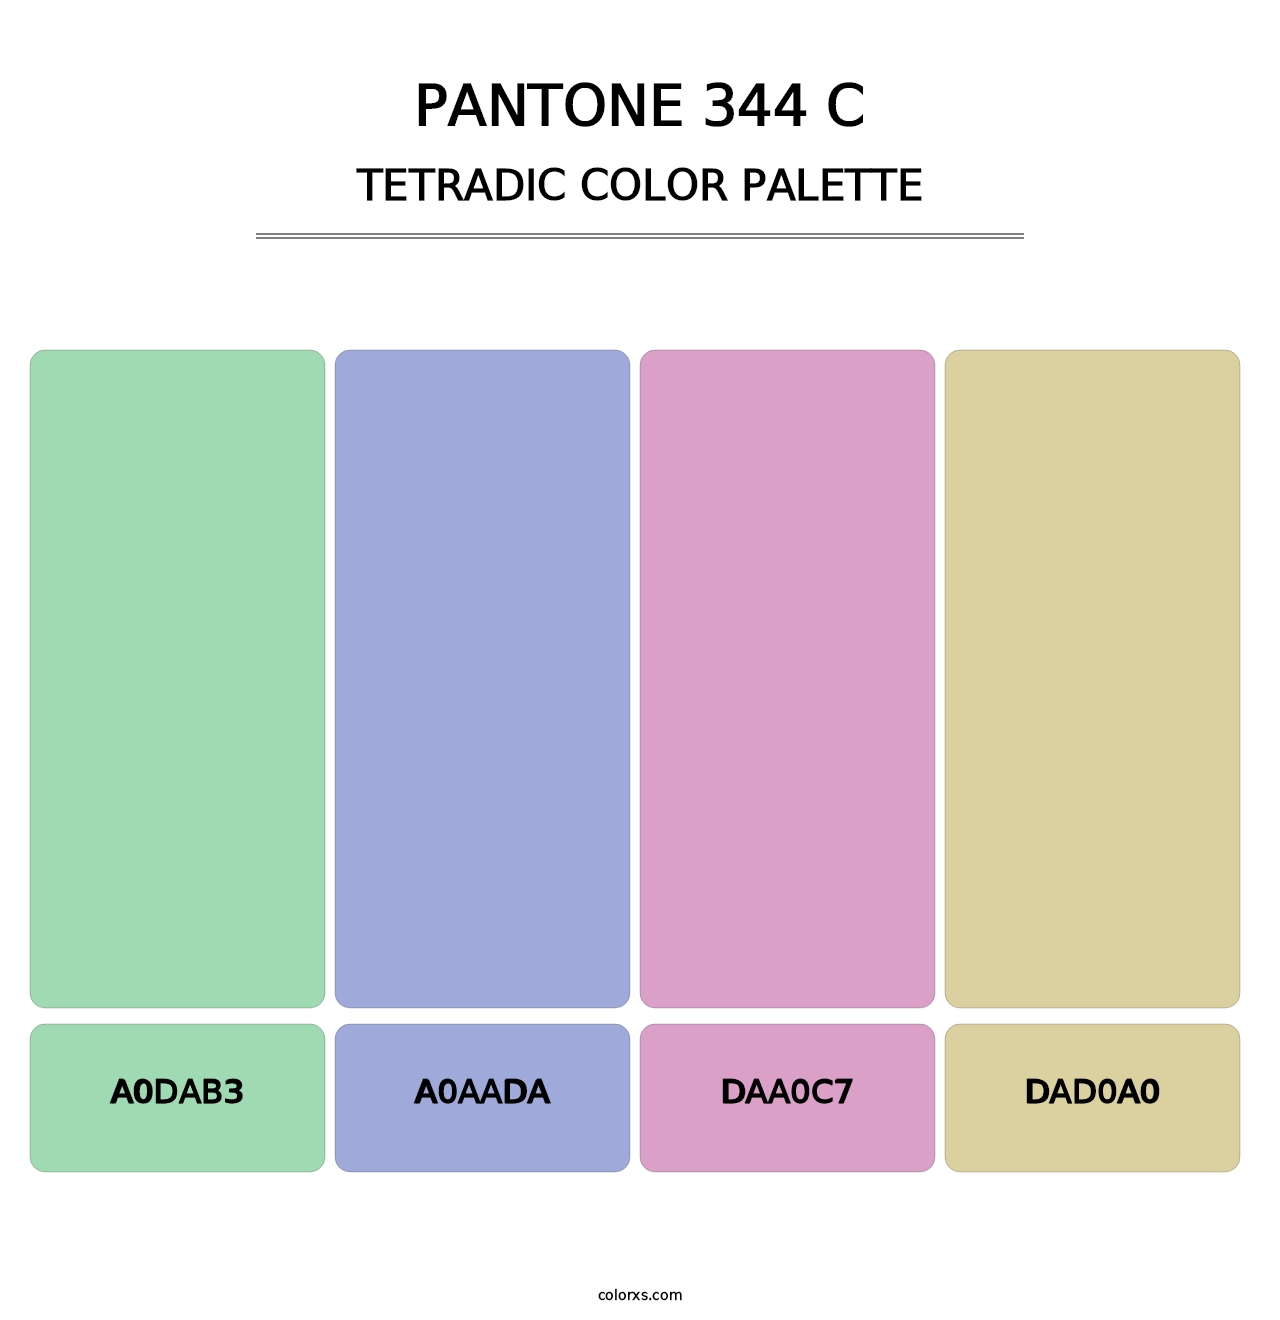 PANTONE 344 C - Tetradic Color Palette